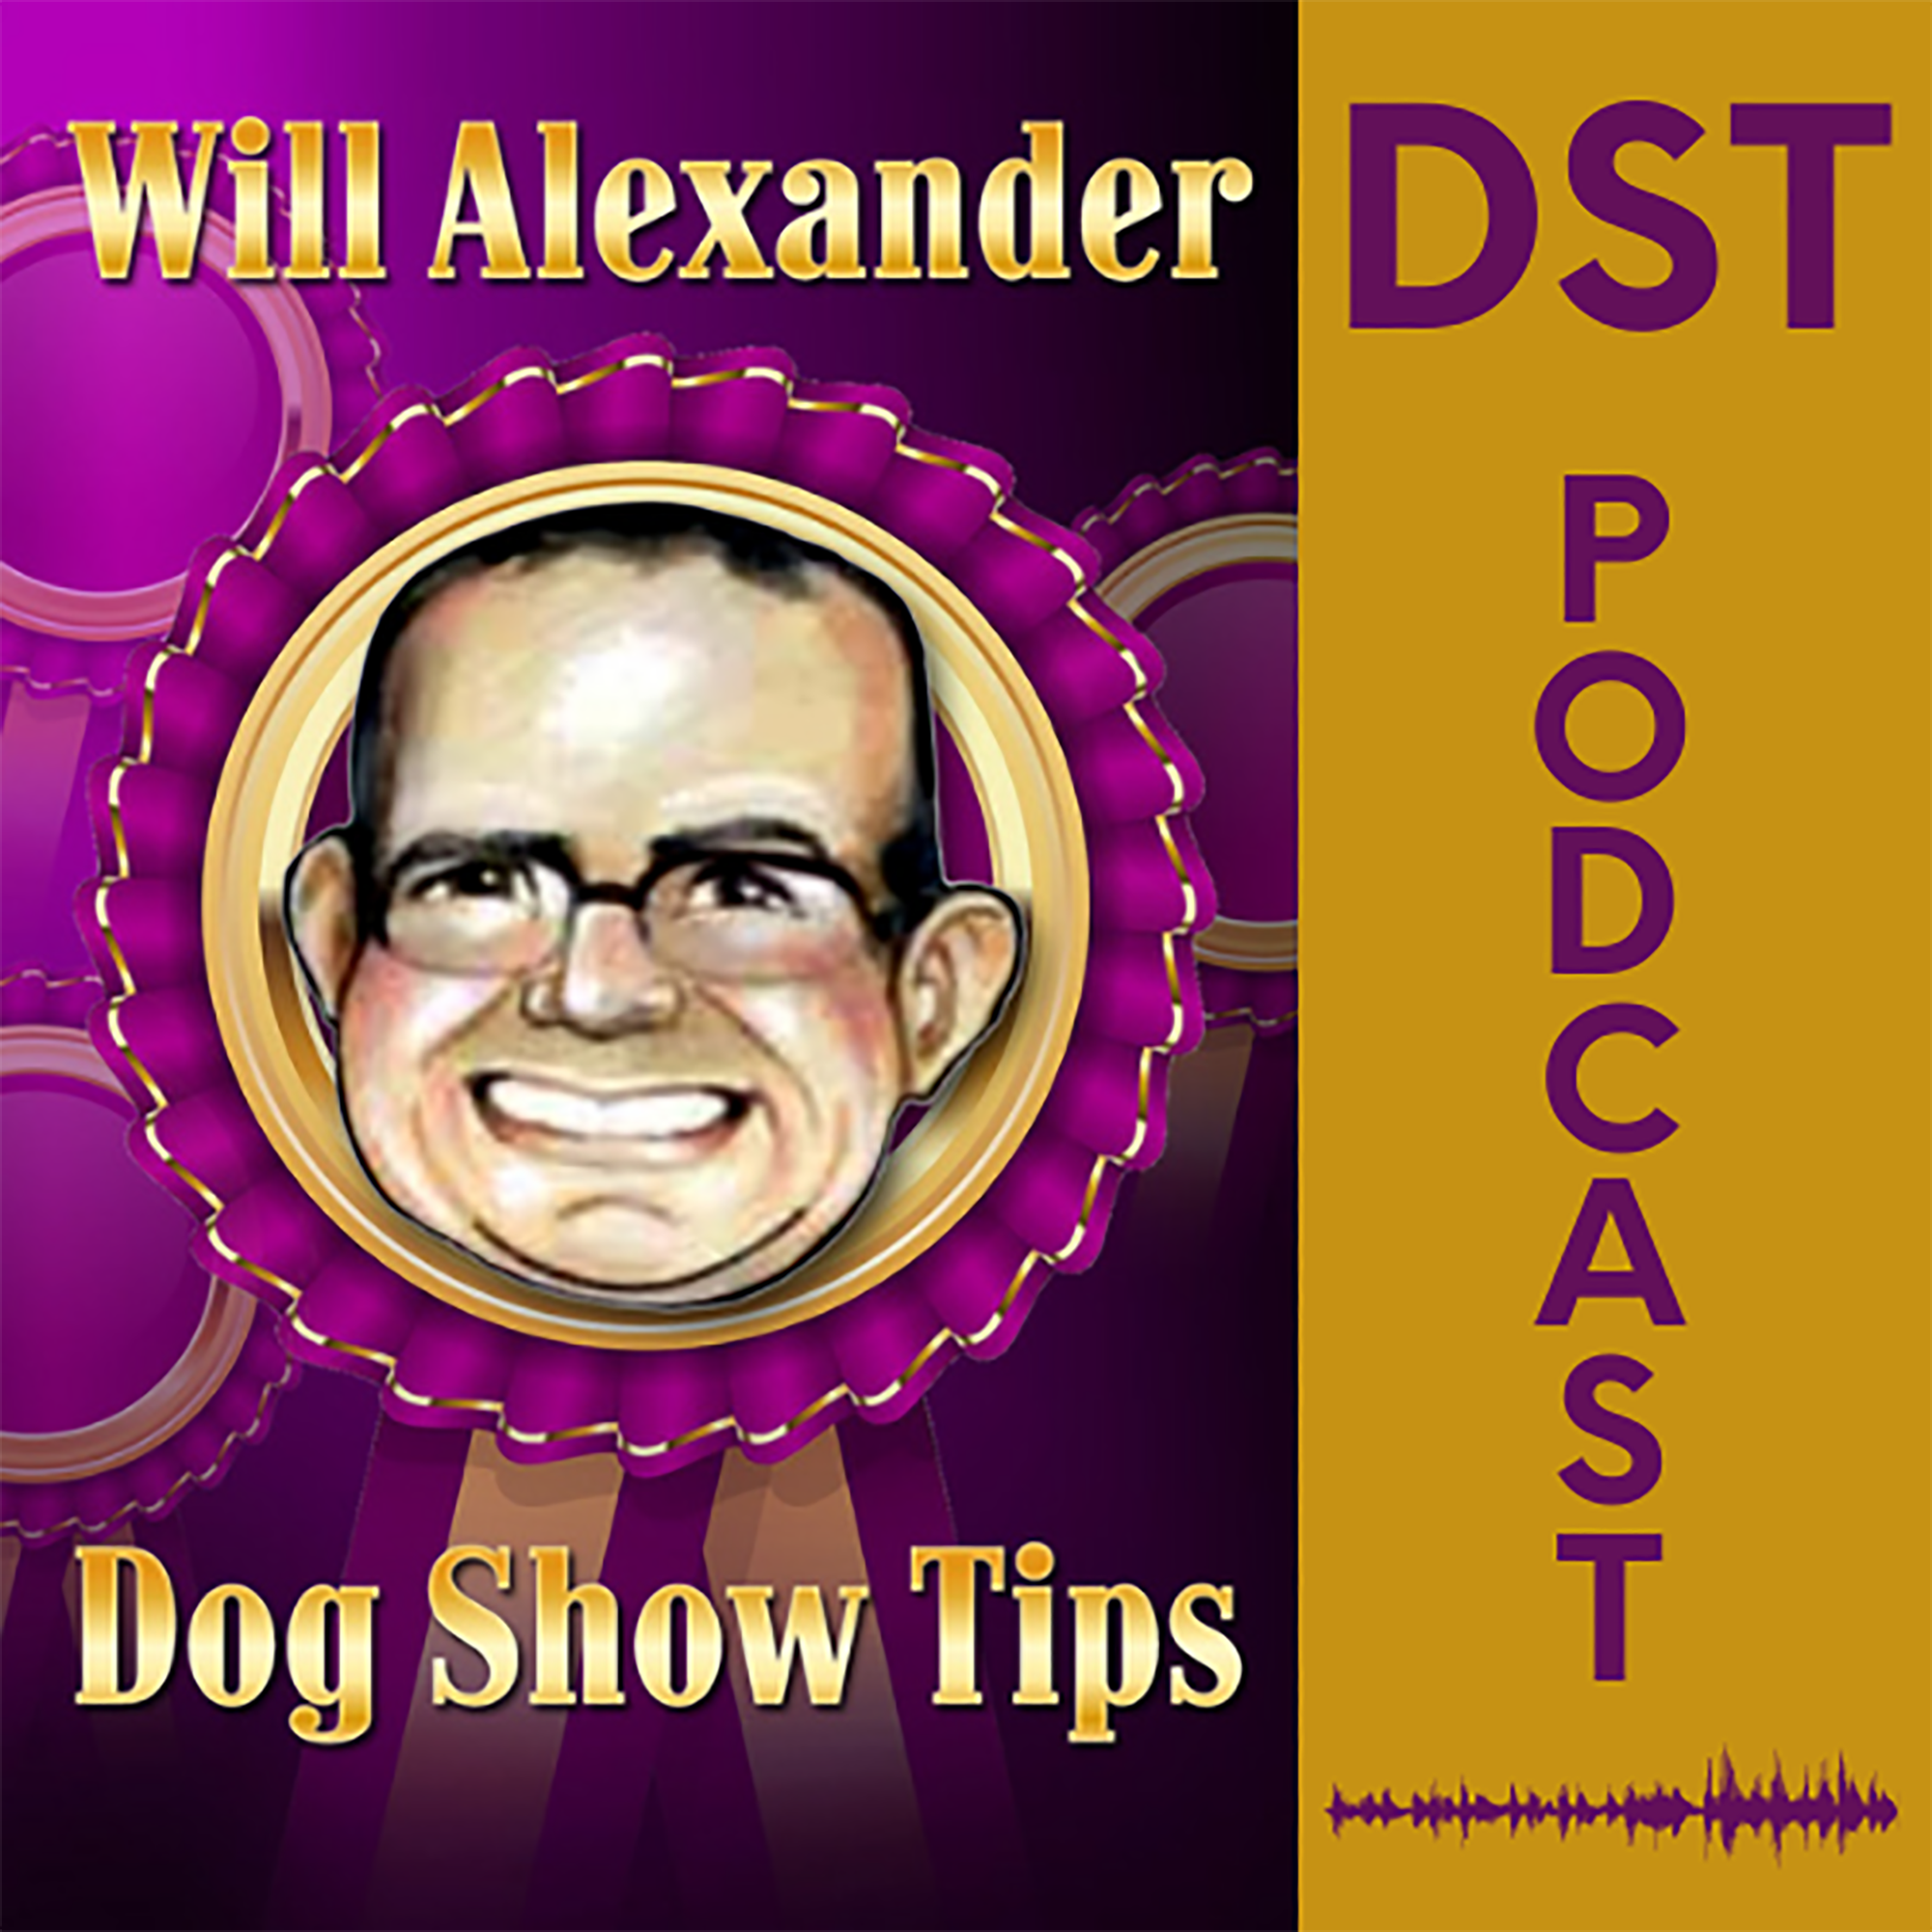 Will Alexander's DST -Ken McDermott Interview with Will Alexander